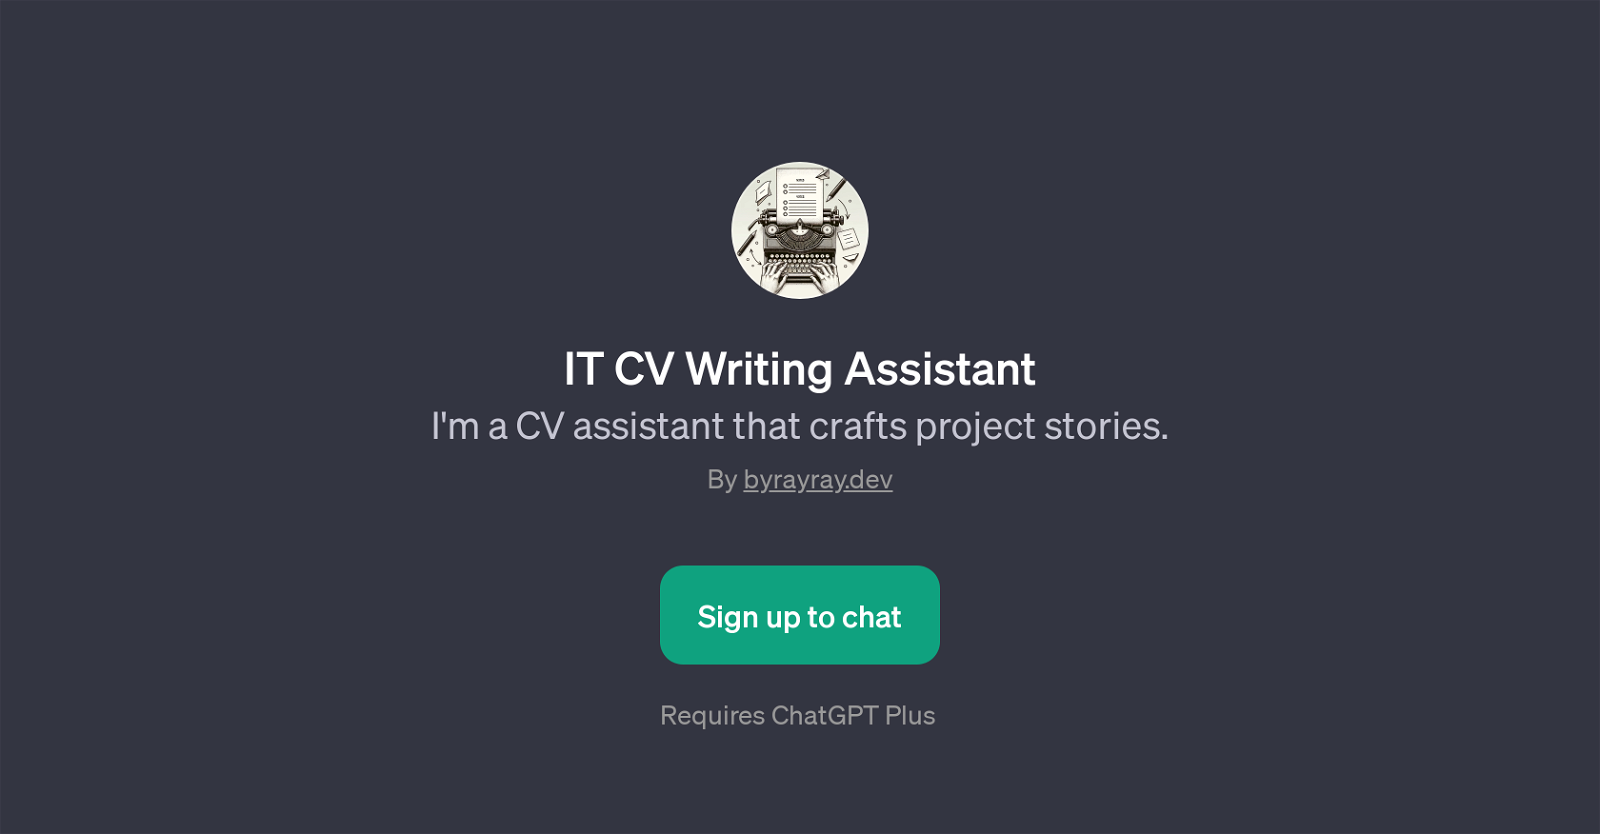 IT CV Writing Assistant website